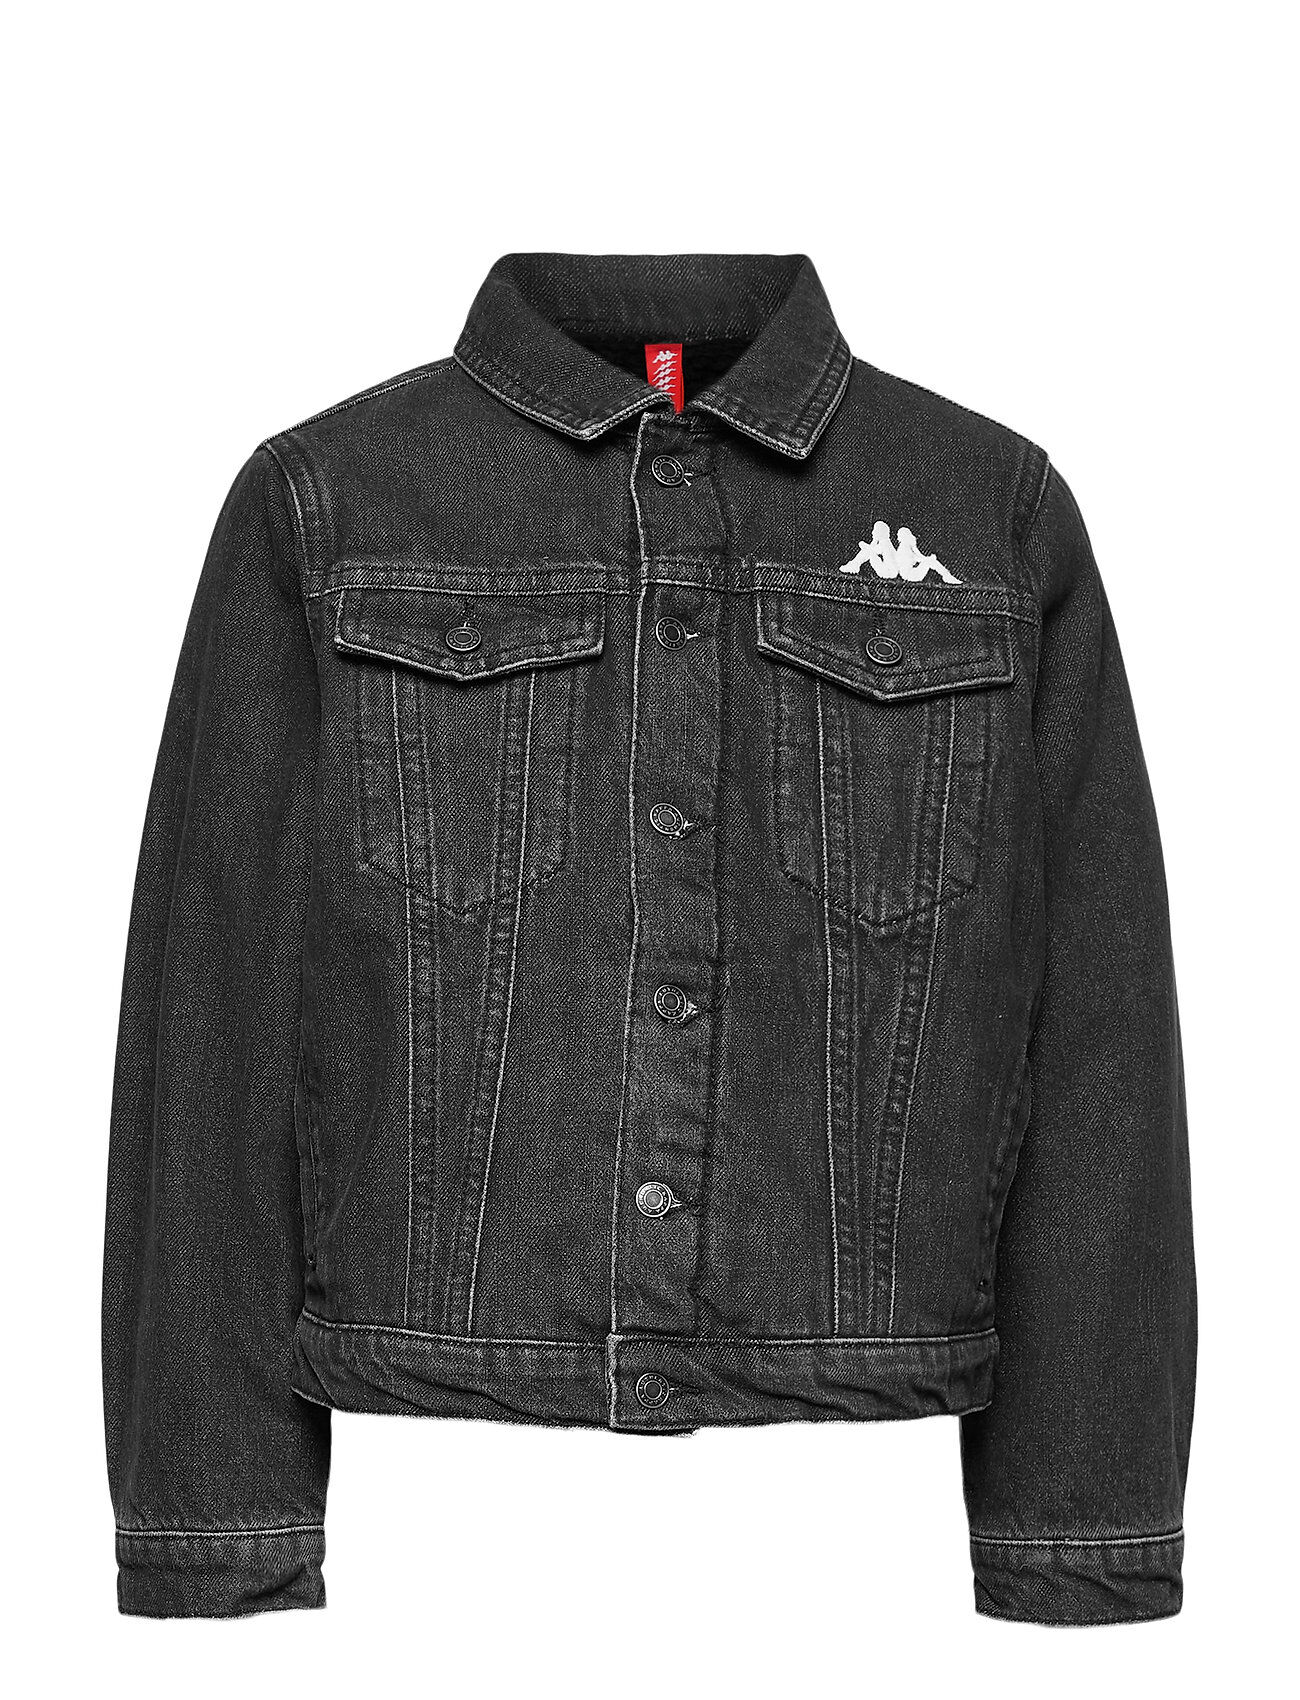 Kappa Jr. Denim Jacket, Bascino Outerwear Jackets & Coats Denim Jacket Grå Kappa